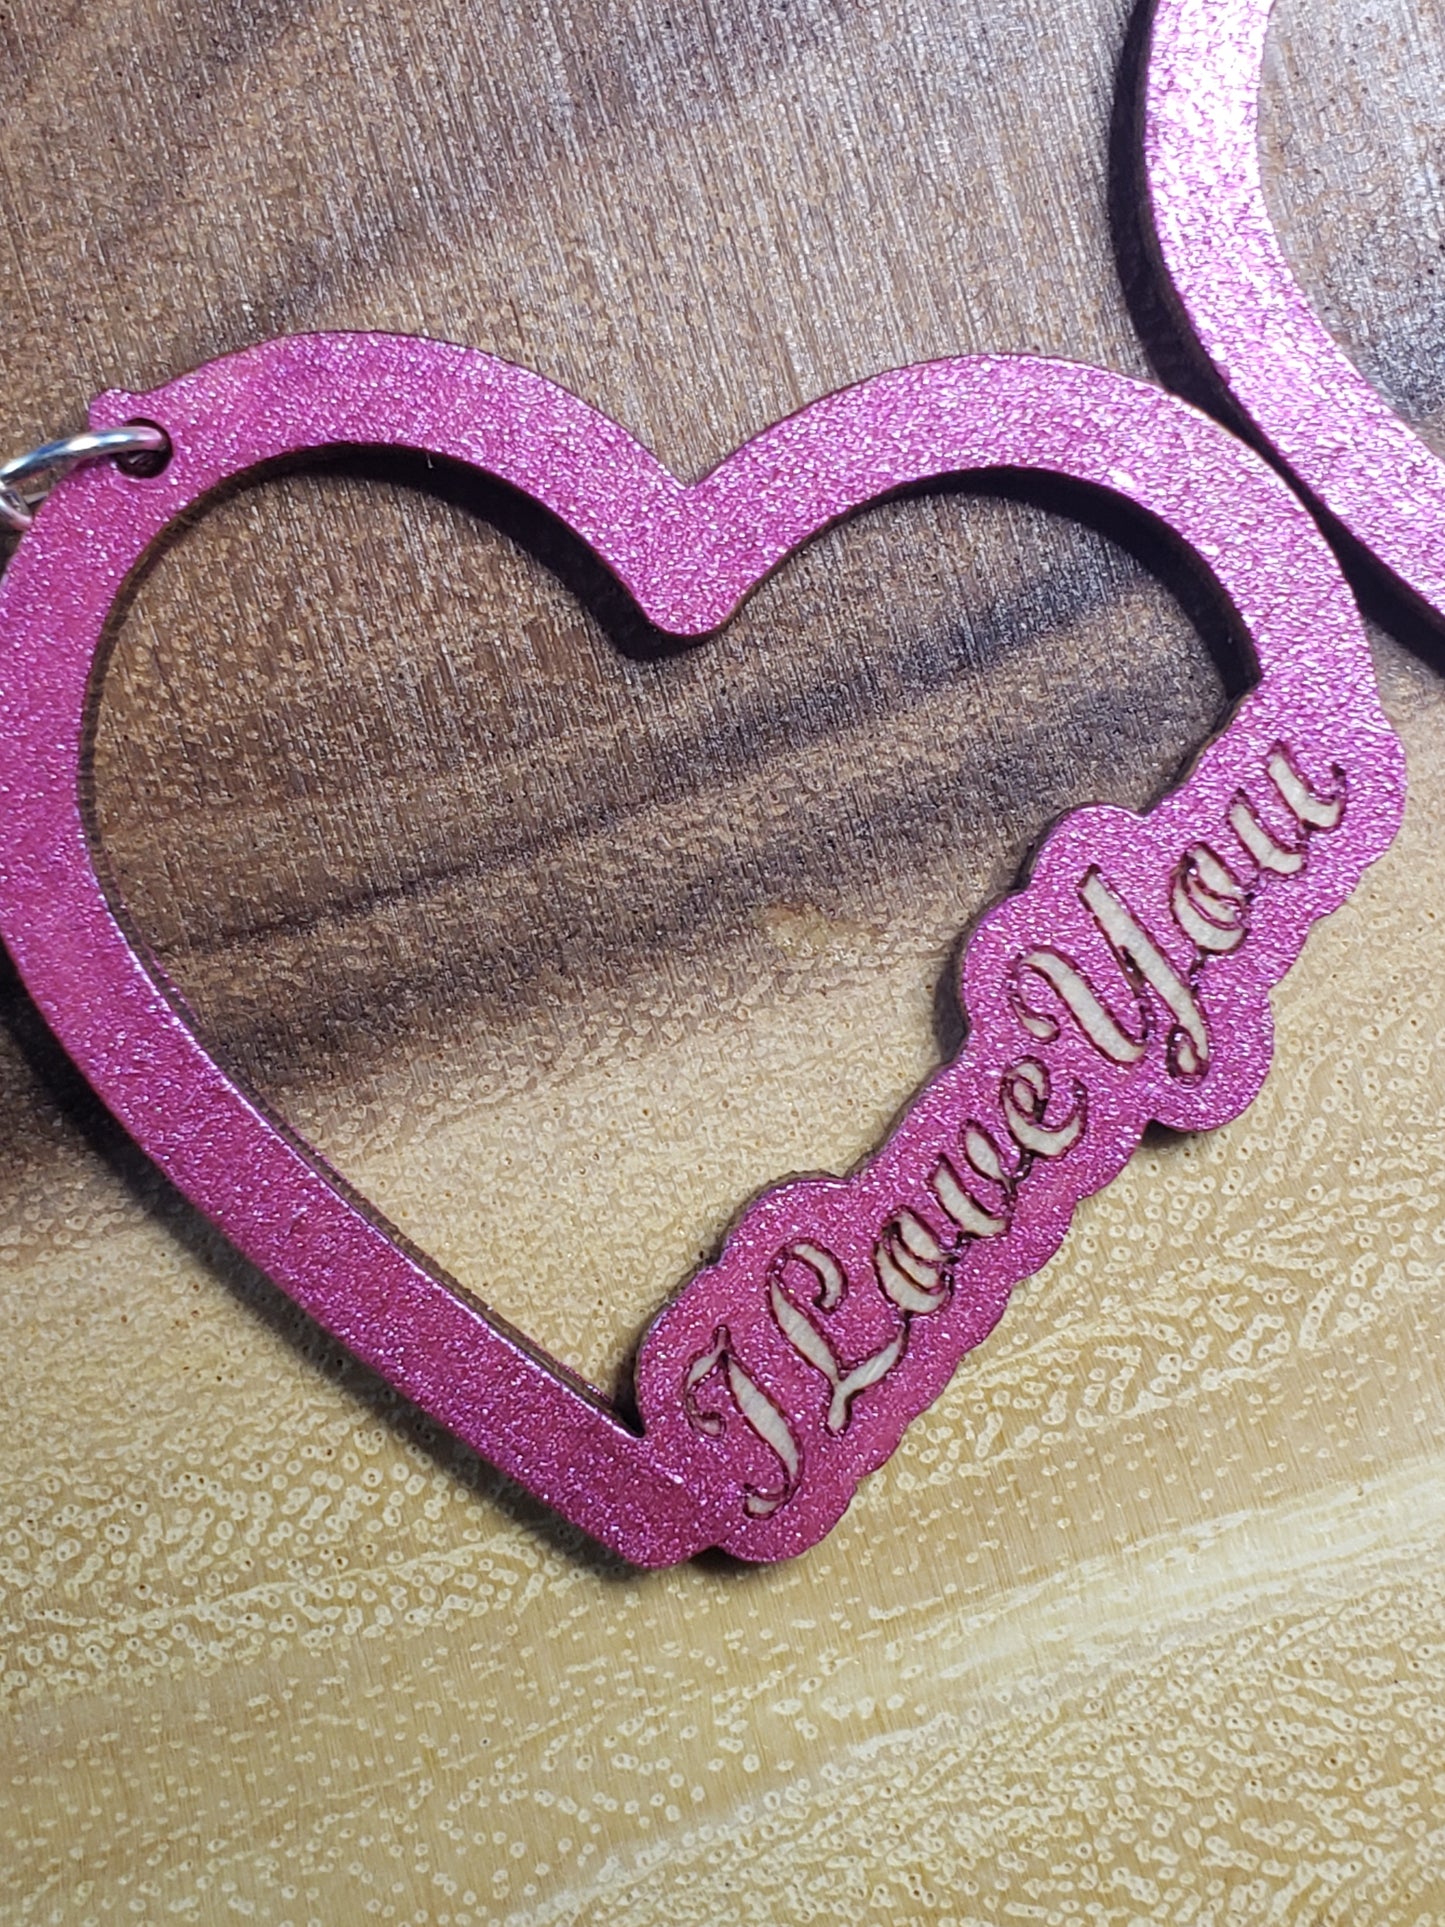 I Love You Heart Cutout Metallic Pink - Hand Painted Laser Cut Earrings